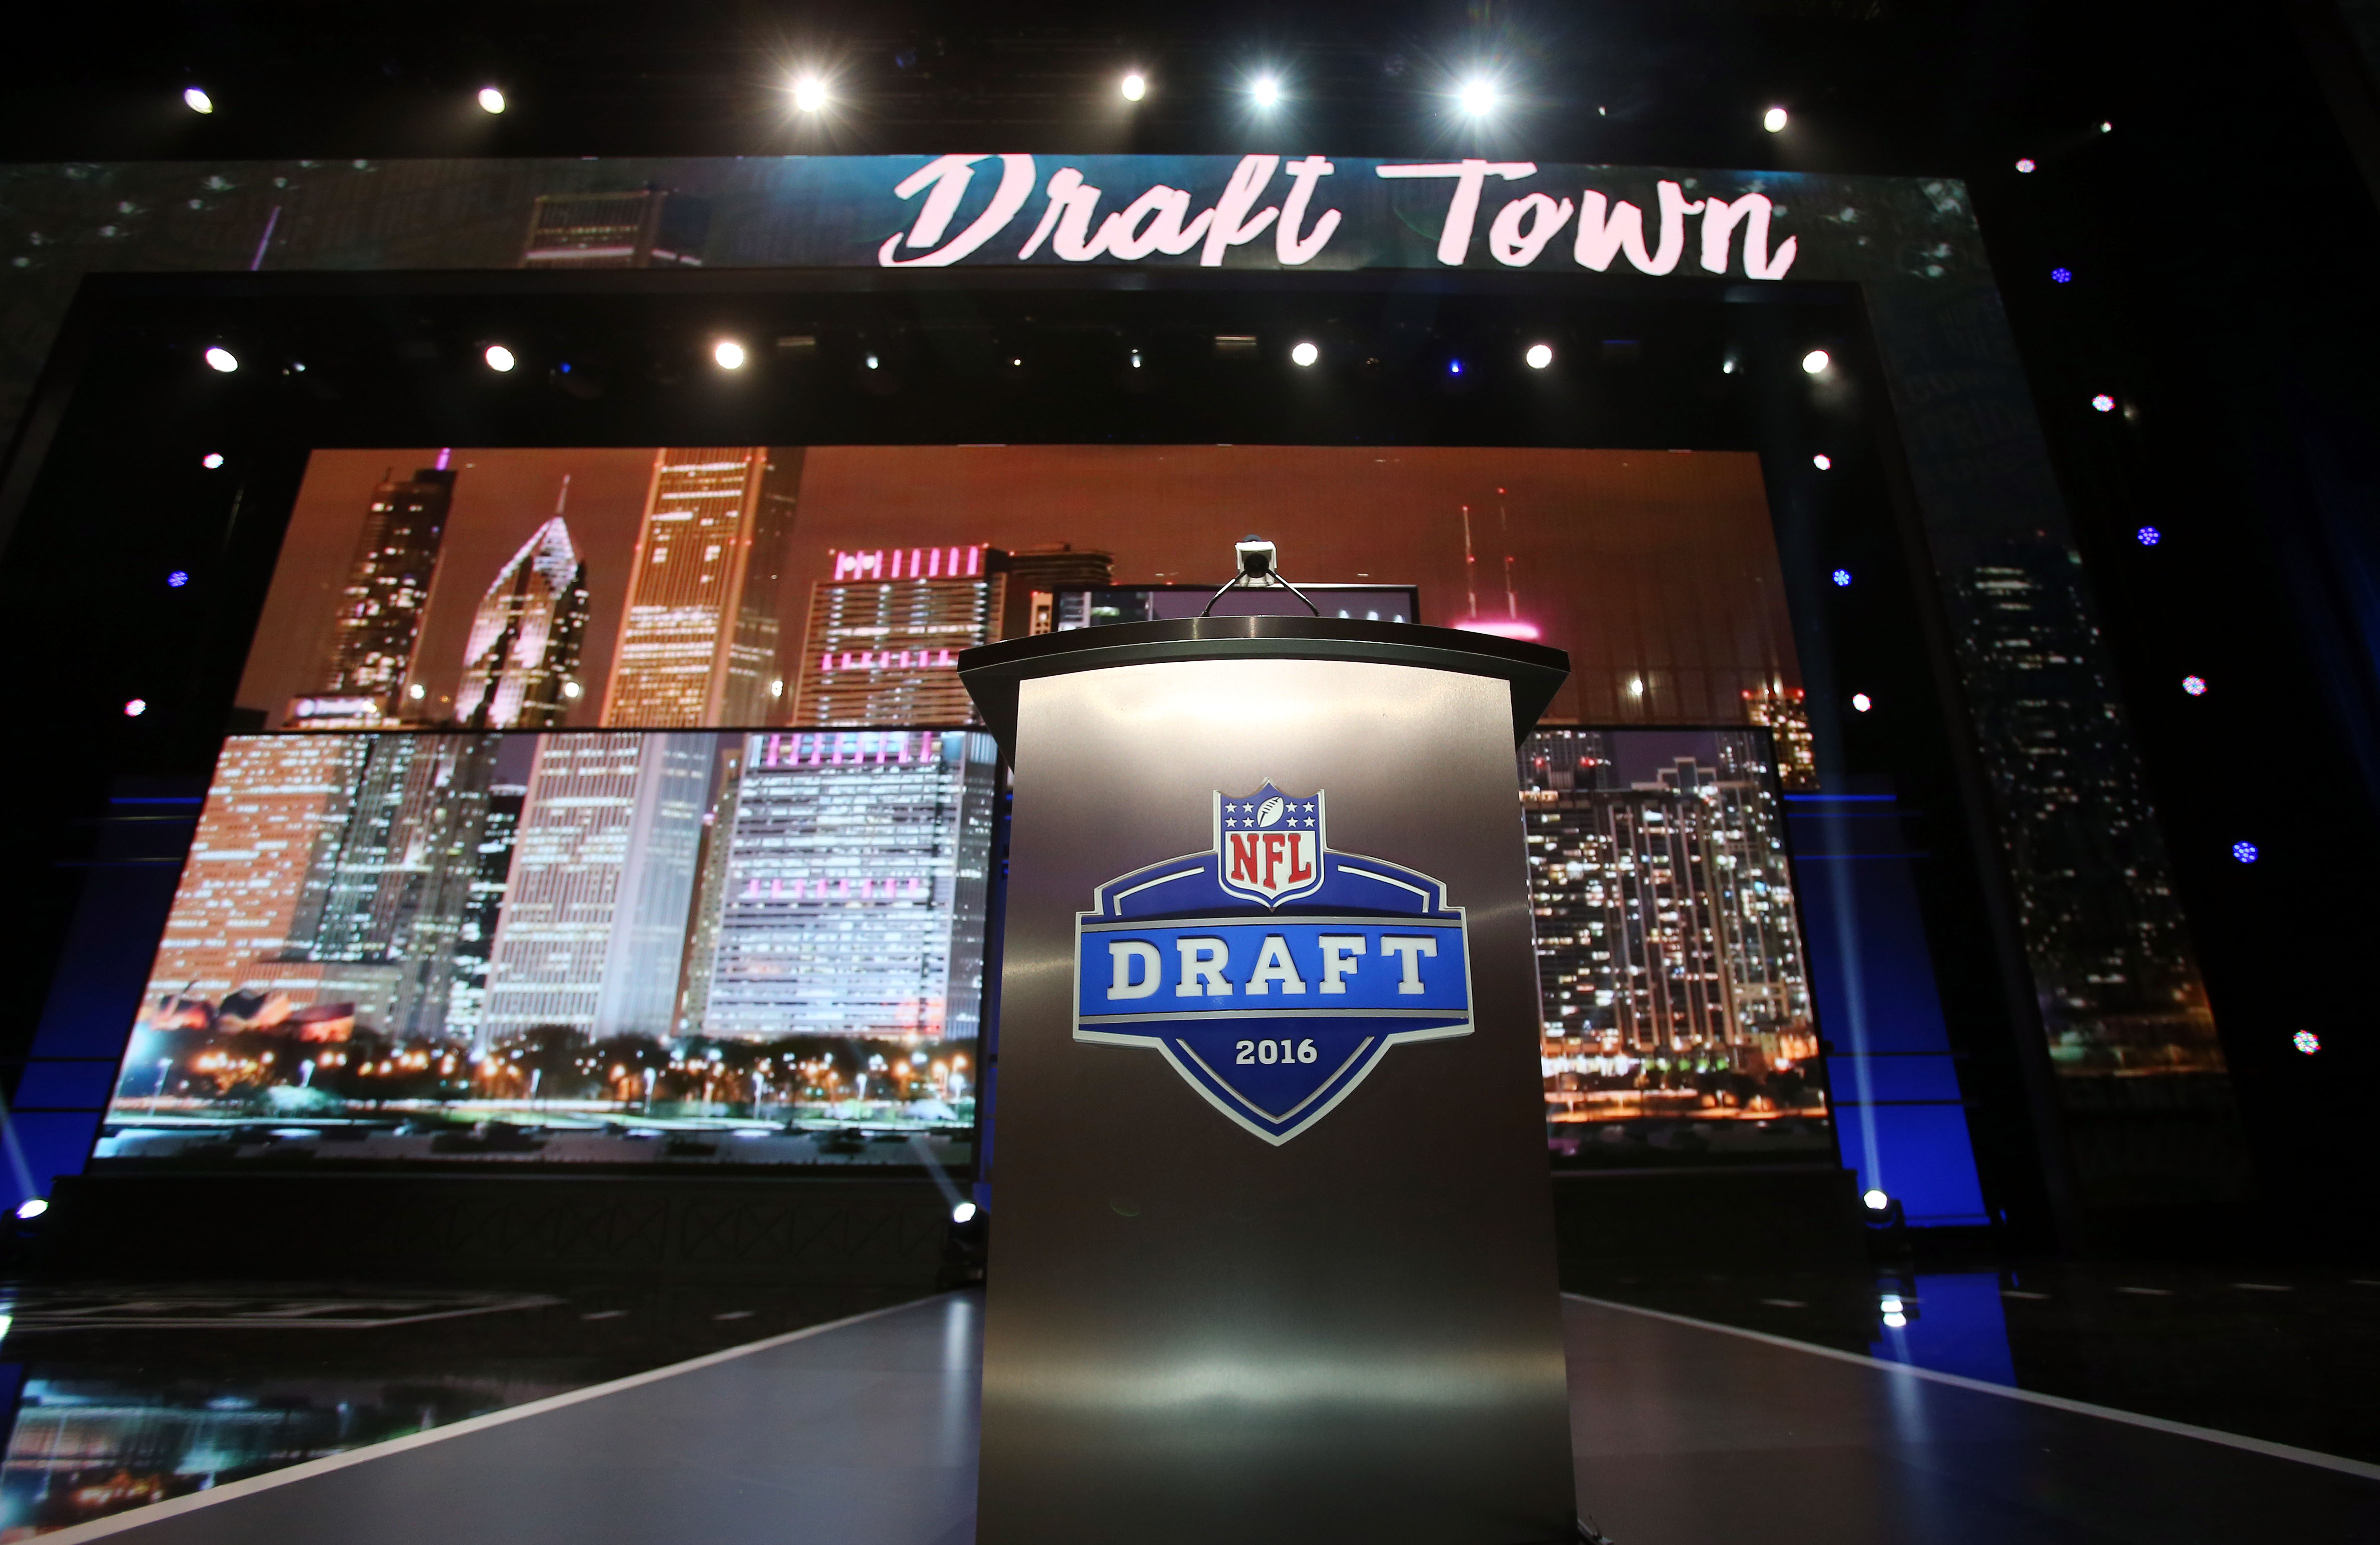 NFL draft tracker: Analysis on picks from Round 2, Round 3